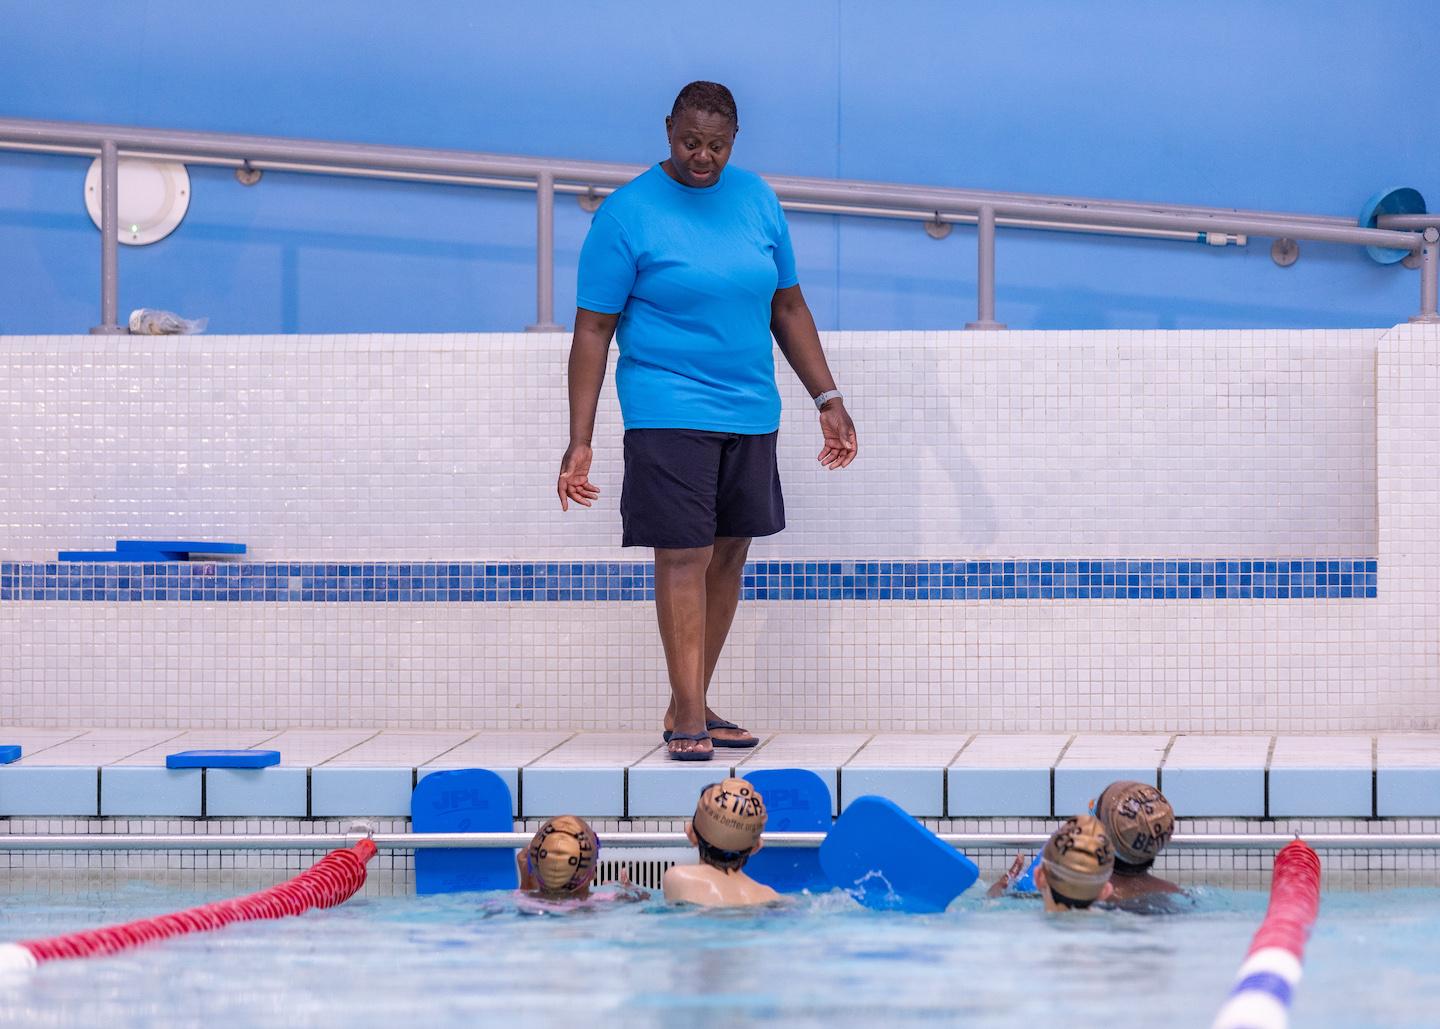 More swim teachers needed, says Swim England